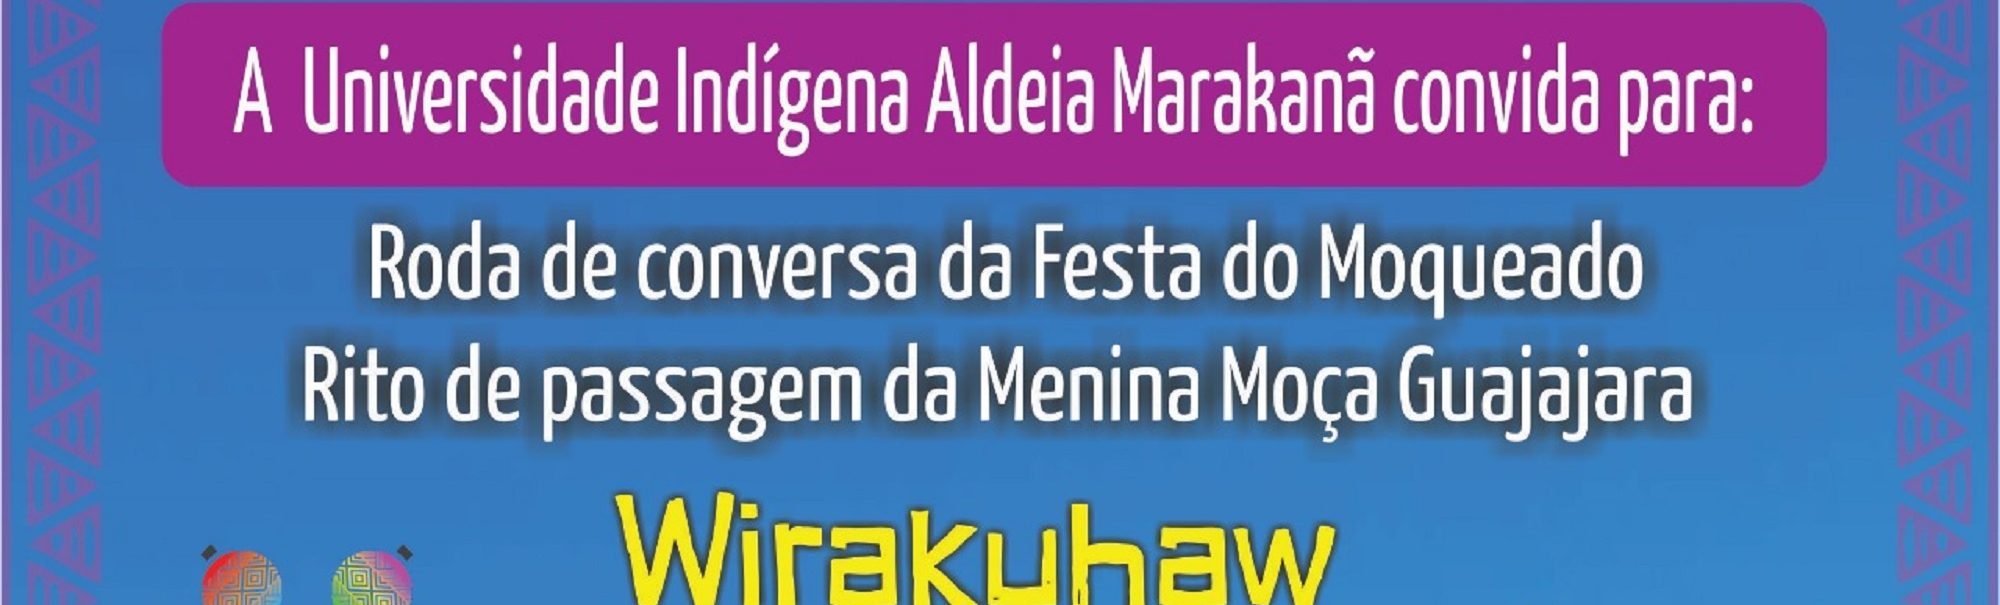 Universidade Indígena Aldeia Maracanã apresenta: Roda de Conversa da Roda do Moqueado Rito de Passagem da menina moça Guajajara – WiraKuhaw